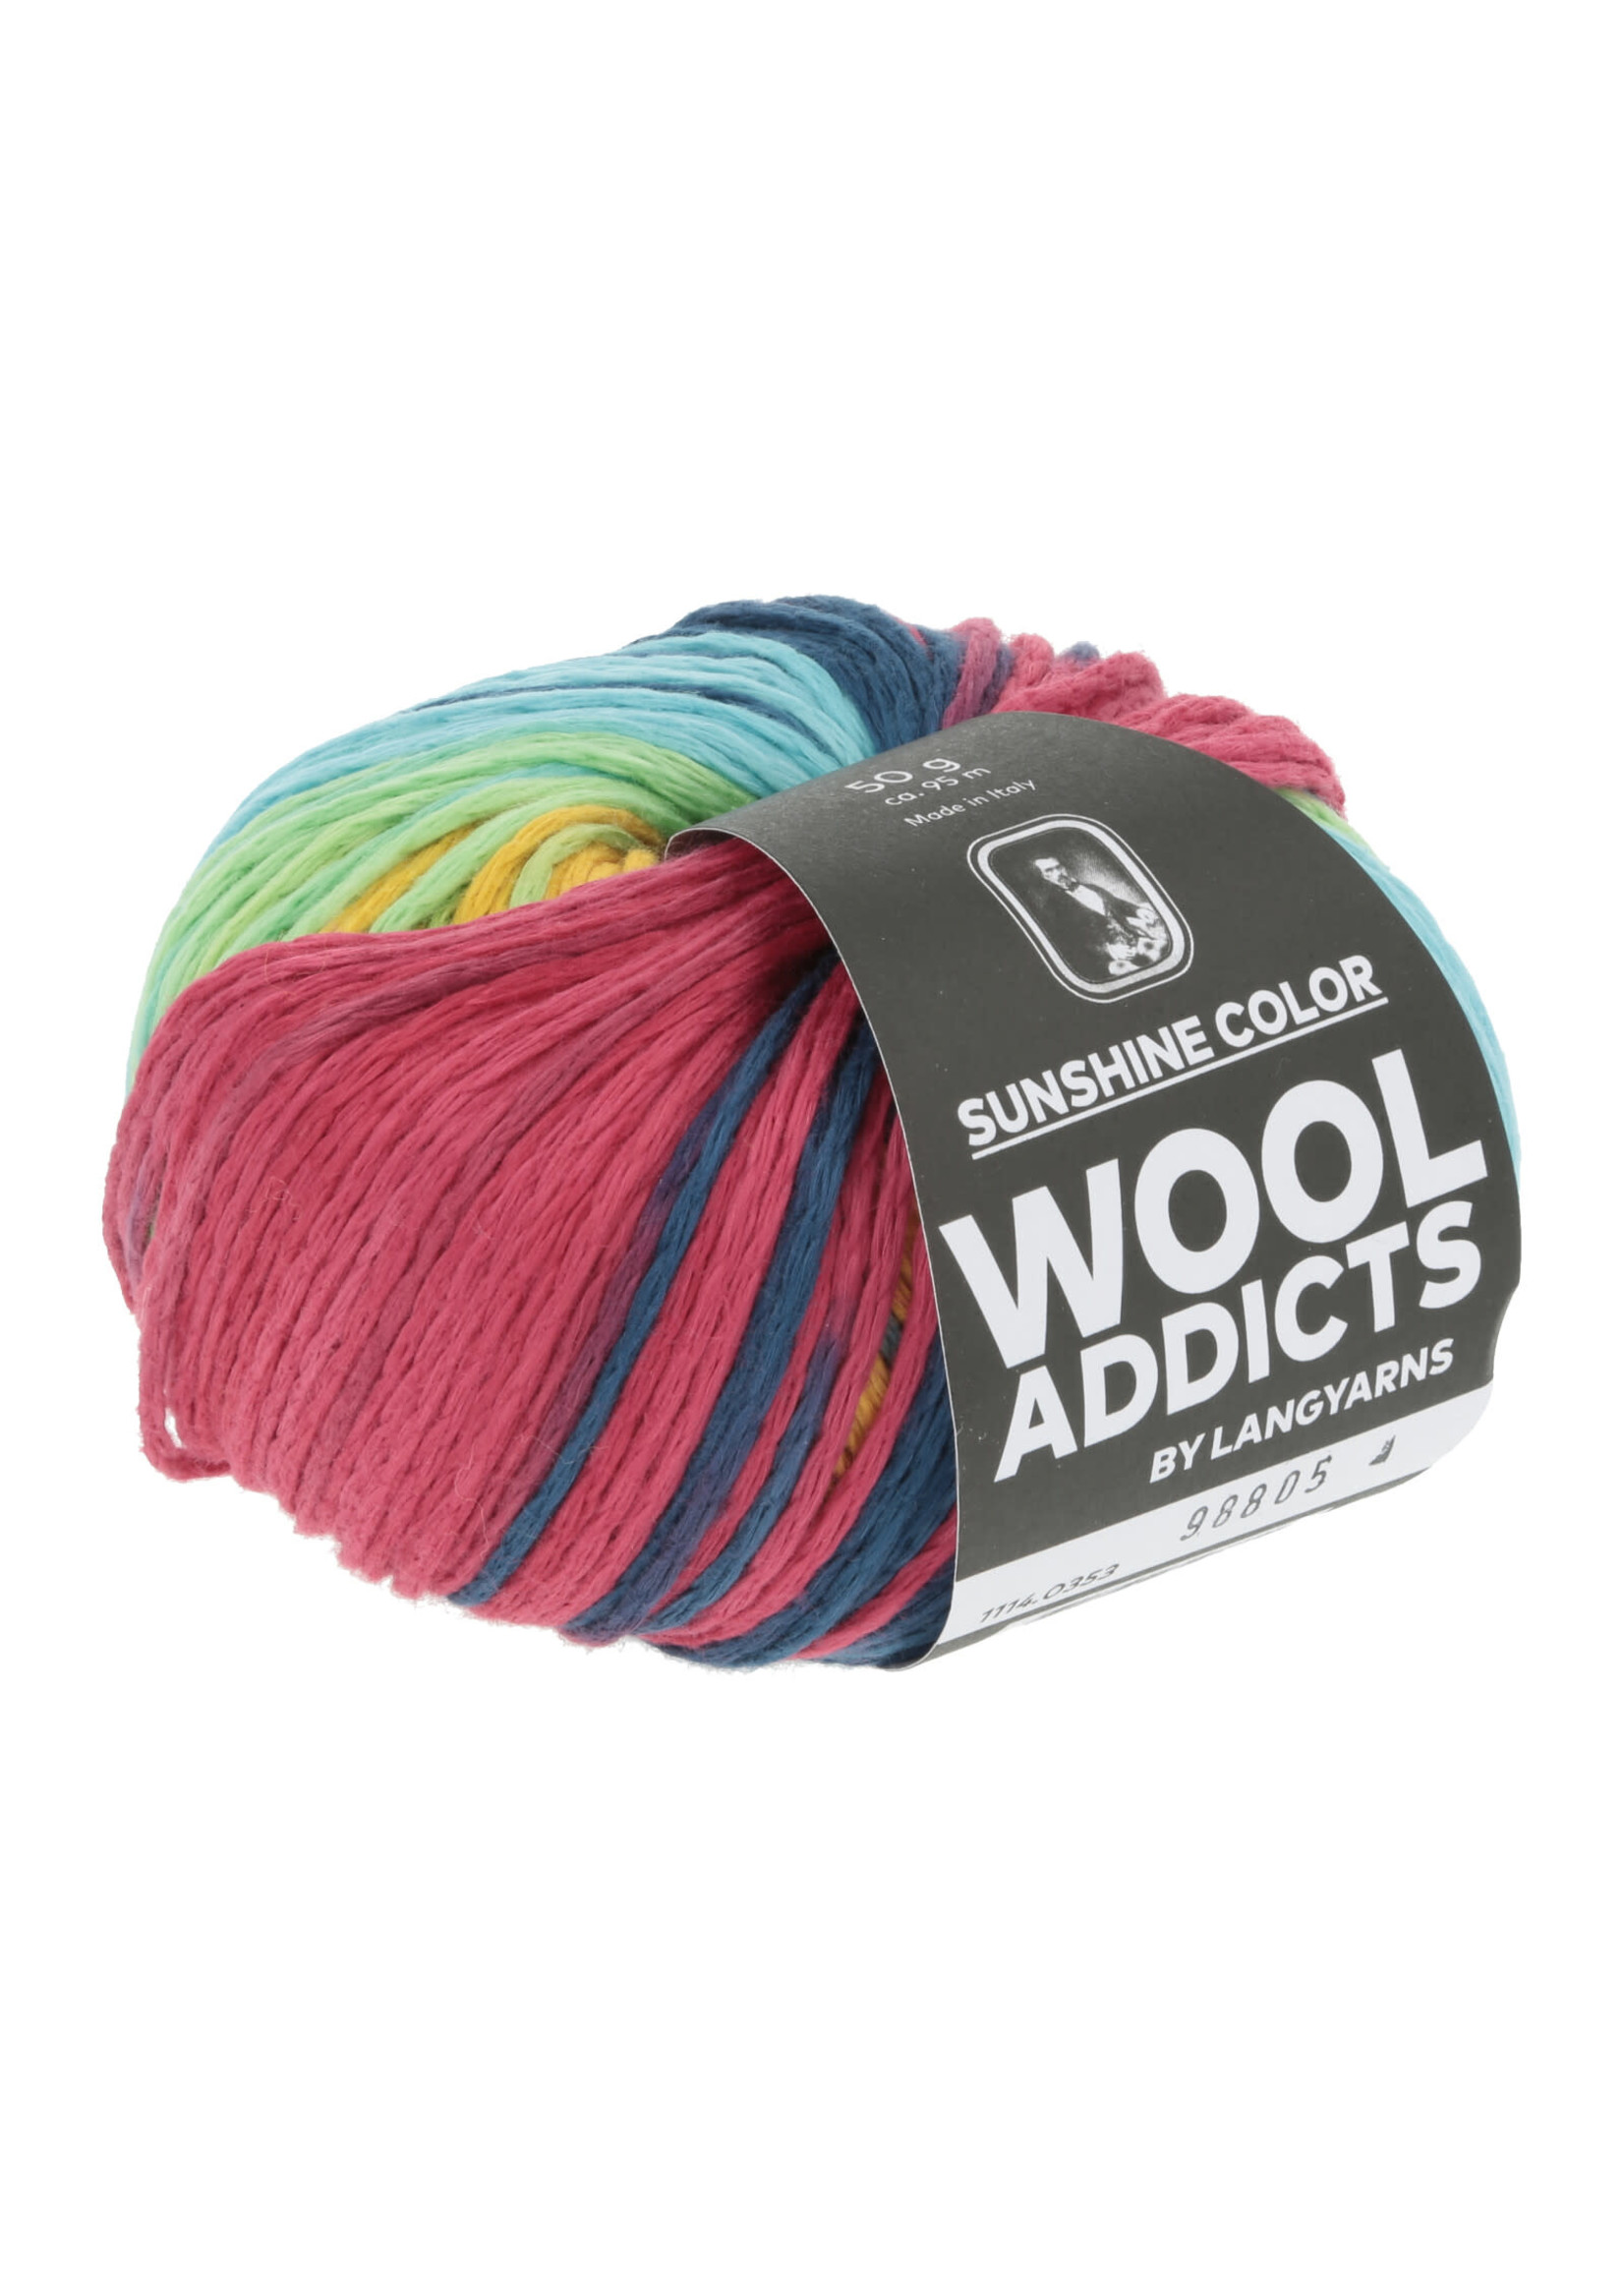 WoolAddicts Sunshine Color - 0353